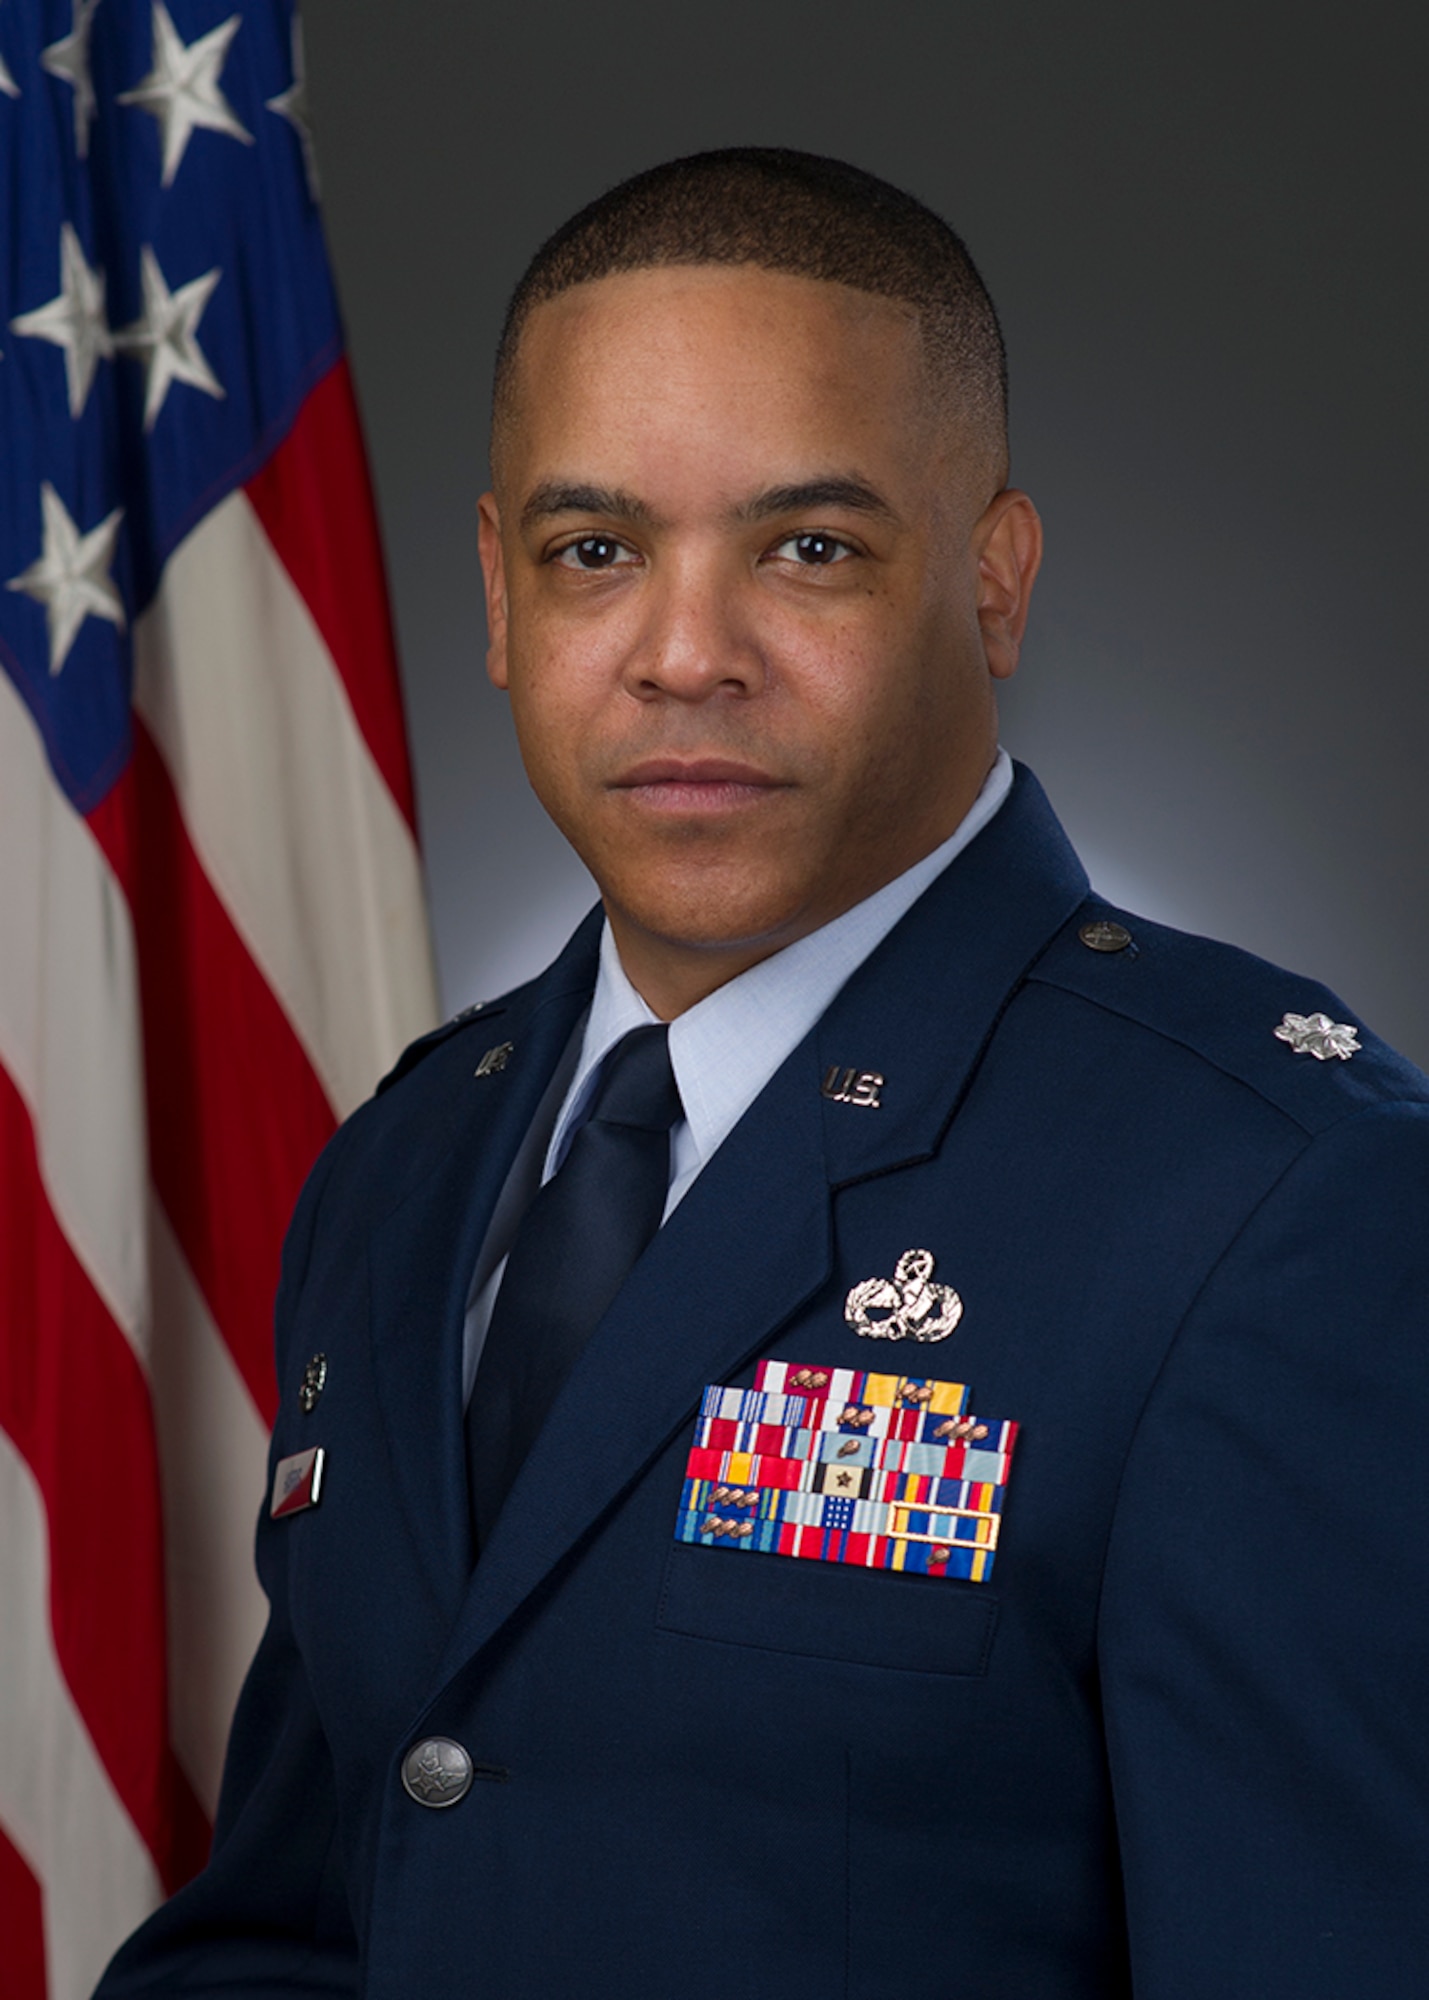 Lt. Col. Fencisco Harris, 60th Maintenance Squadron commander